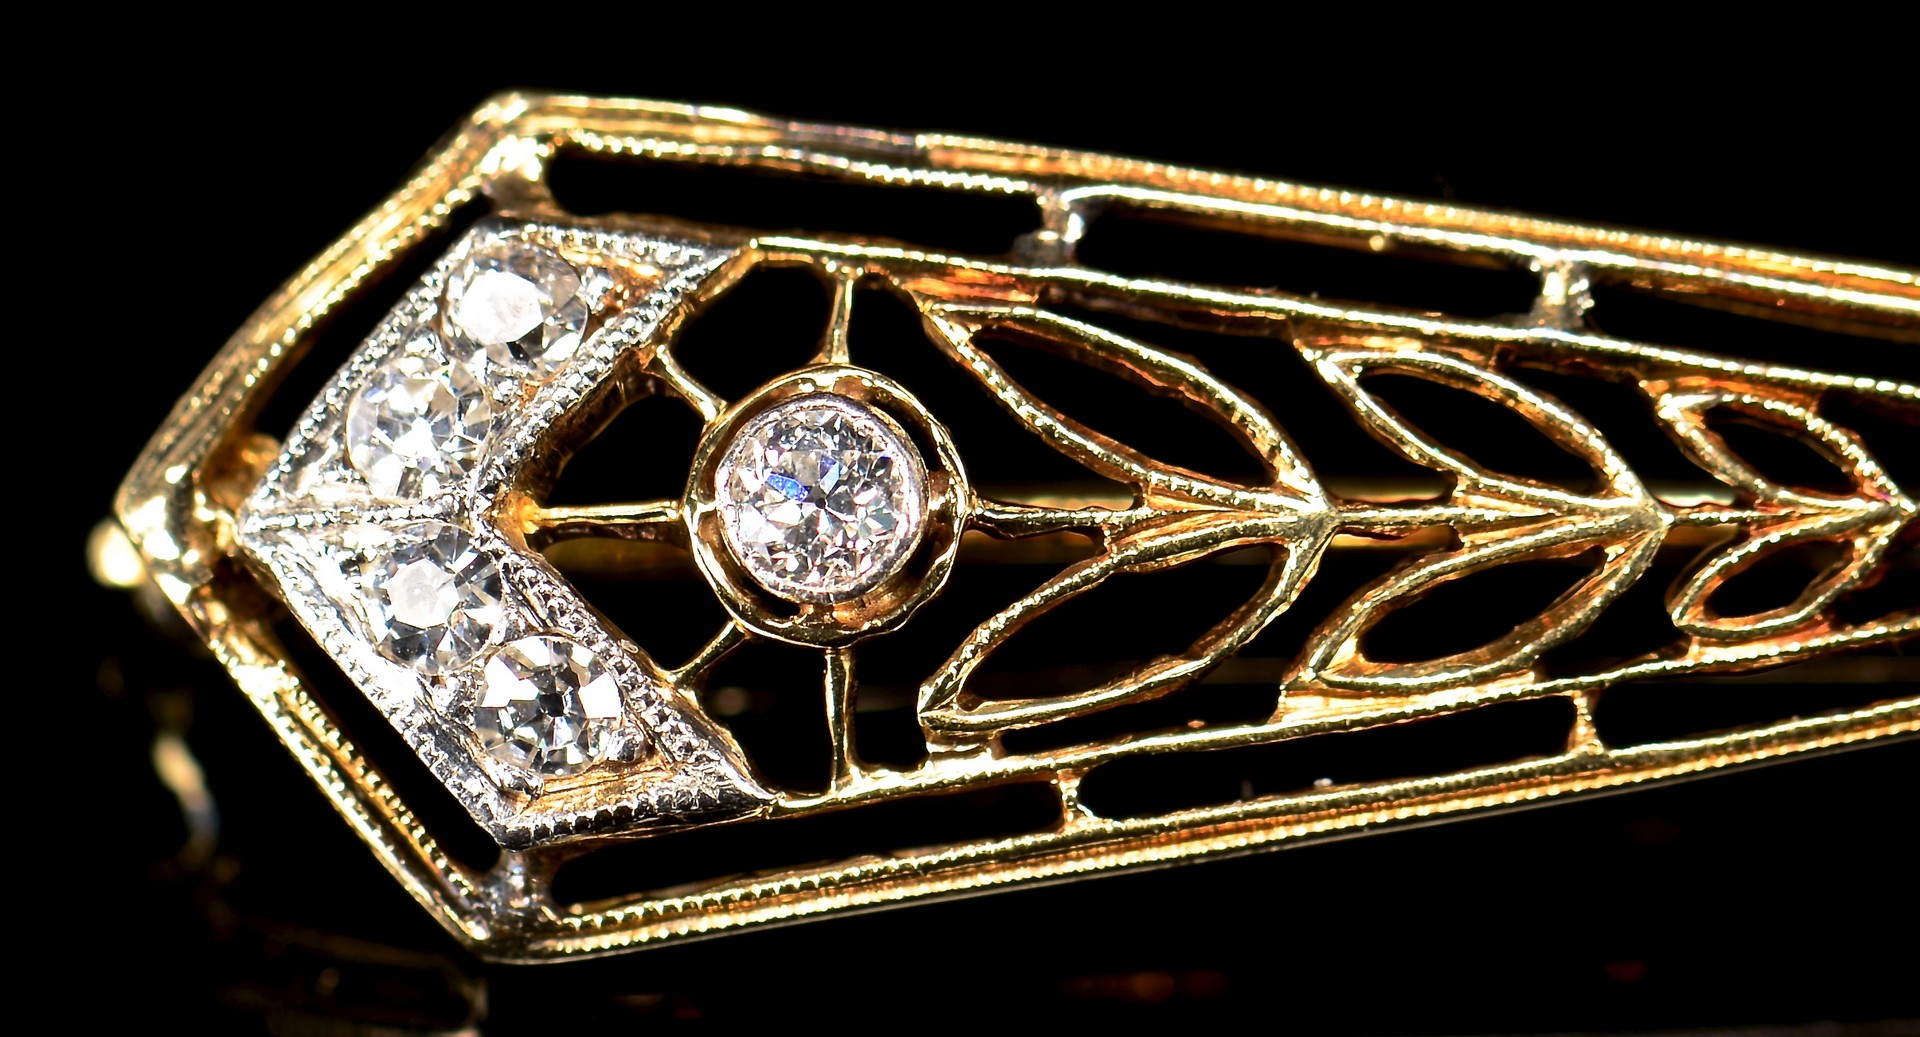 Lot 593: 2 Gold Diamond Jewelry Items